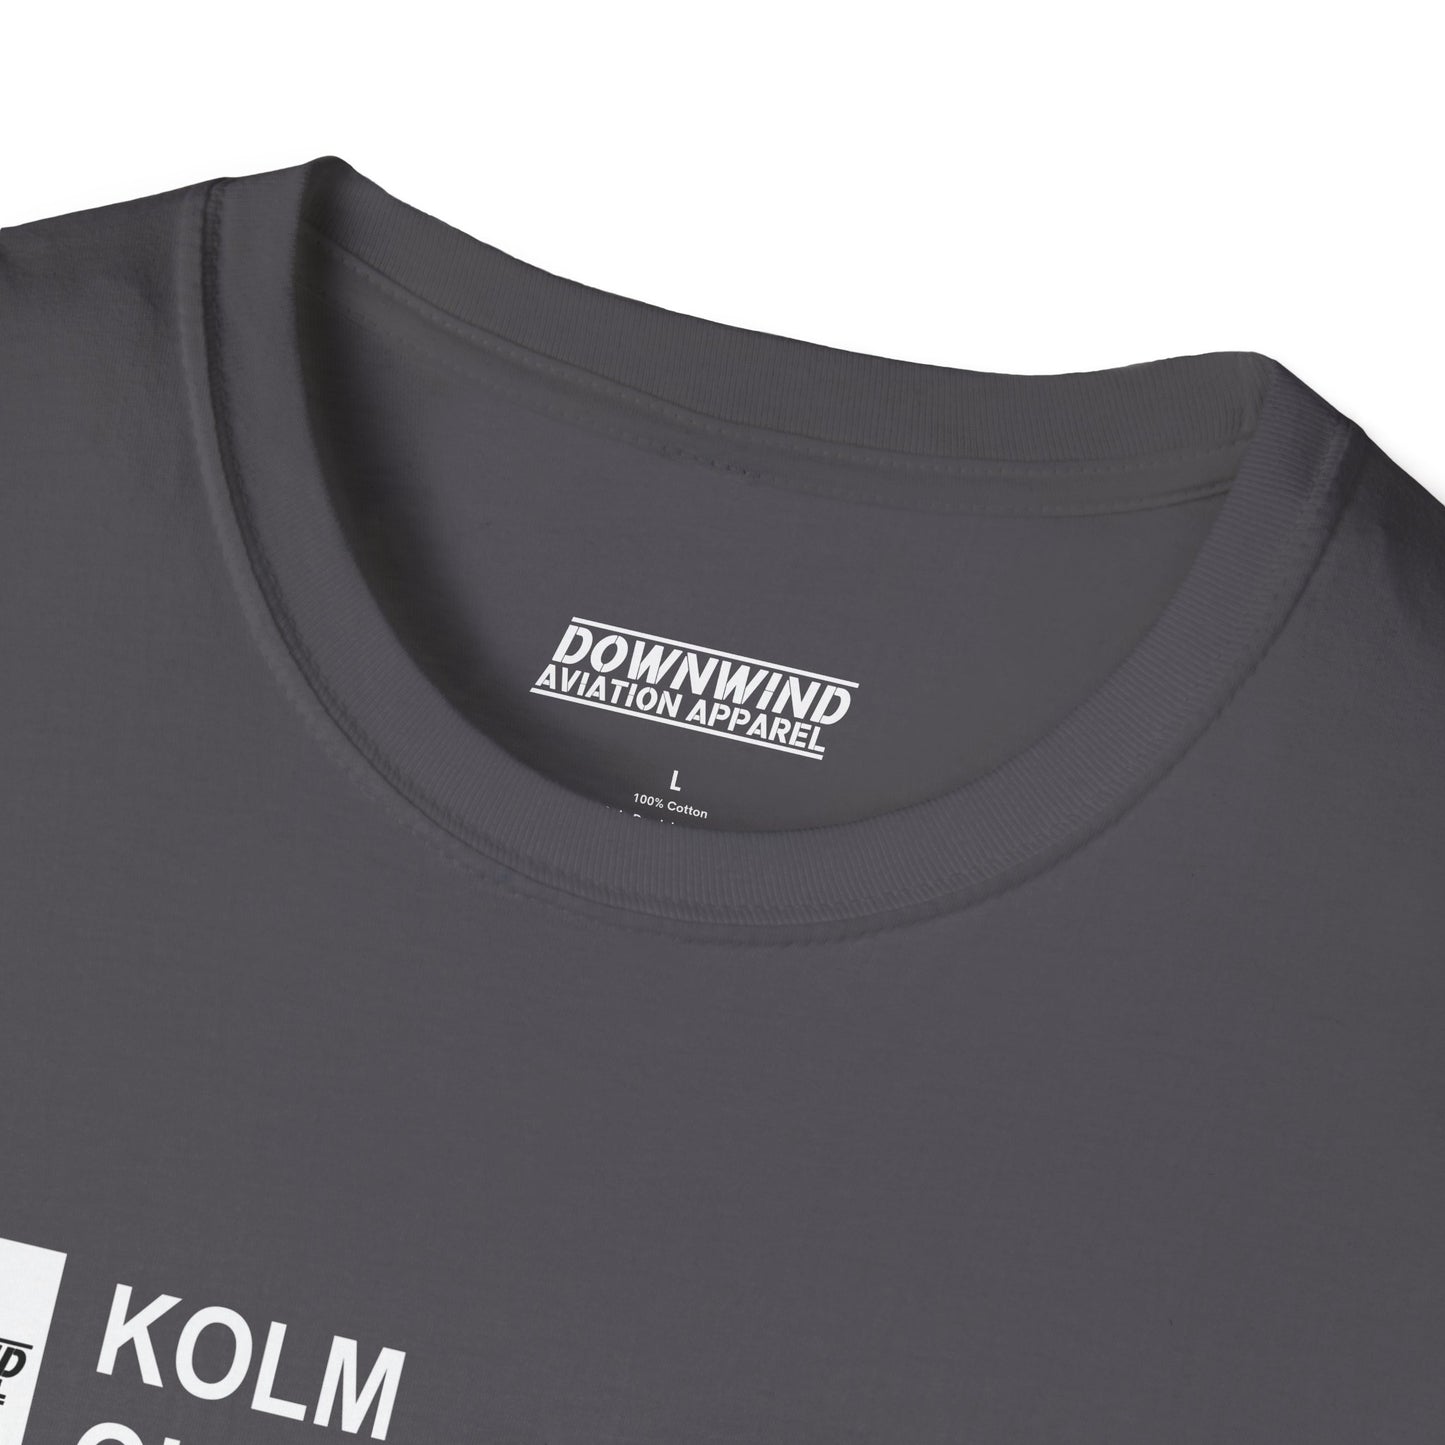 KOLM / Olympia Airport T-Shirt